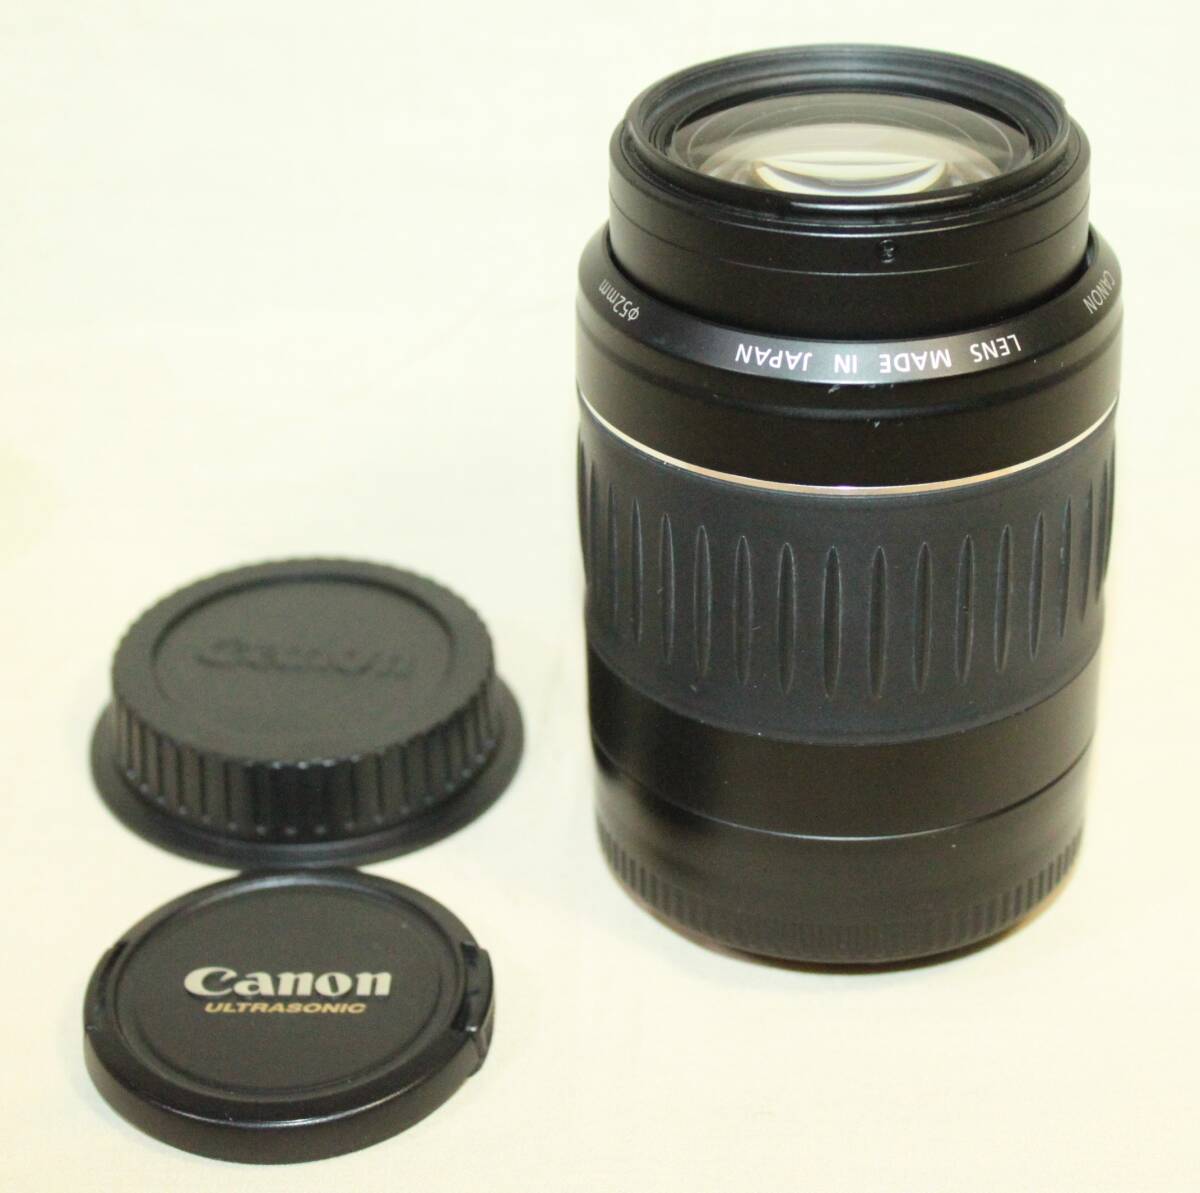 Canon キヤノン レンズ EF 55-200mm ULTRASONIC 1:4.5-5.6 II USM キャップ付き 動作確認済みの画像4